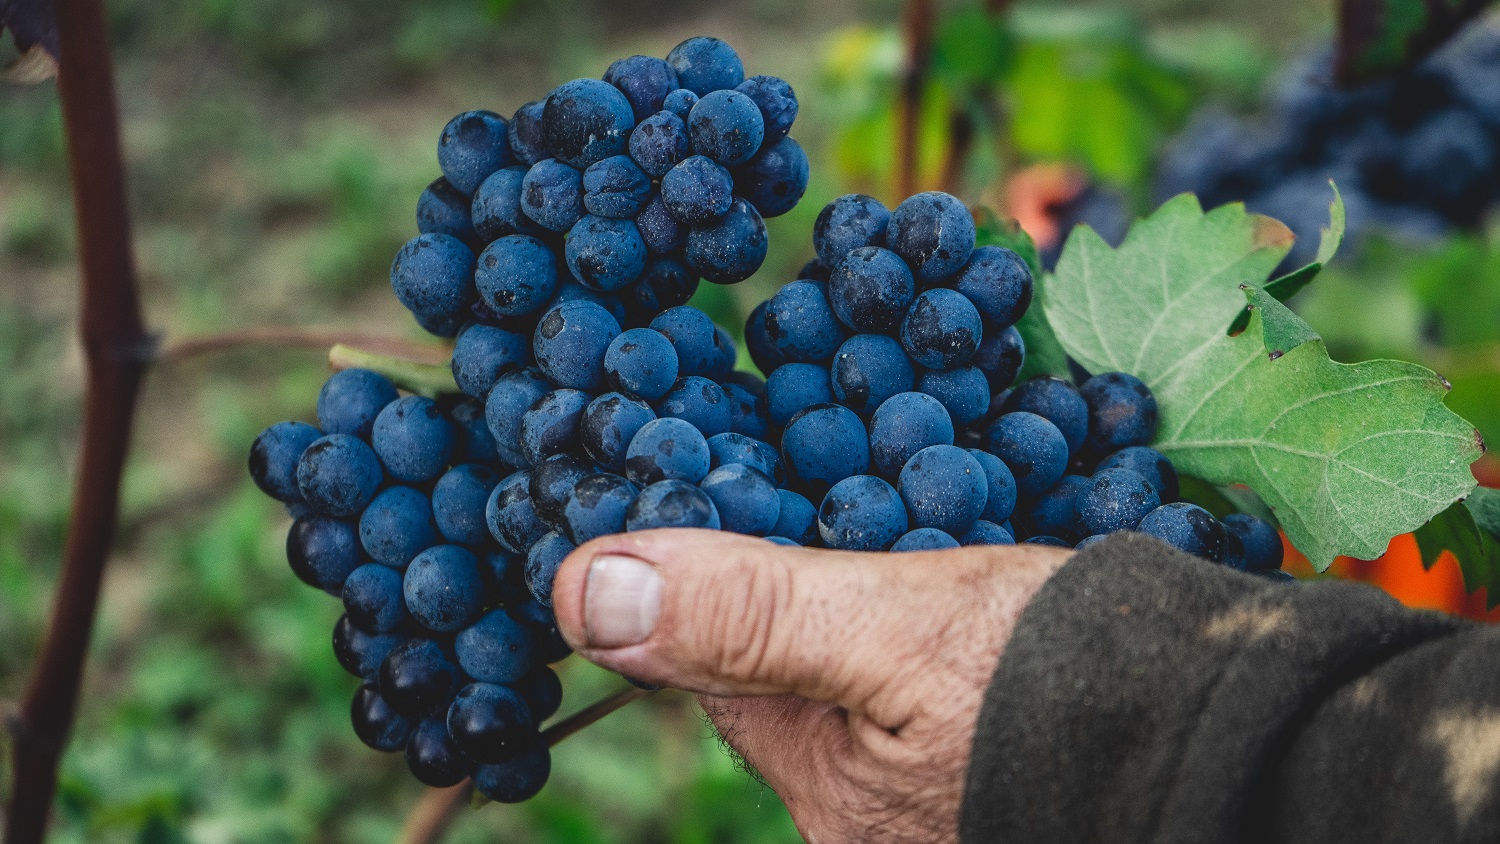 Tuscany is home to many international grape varieties like Cabernet Sauvignon